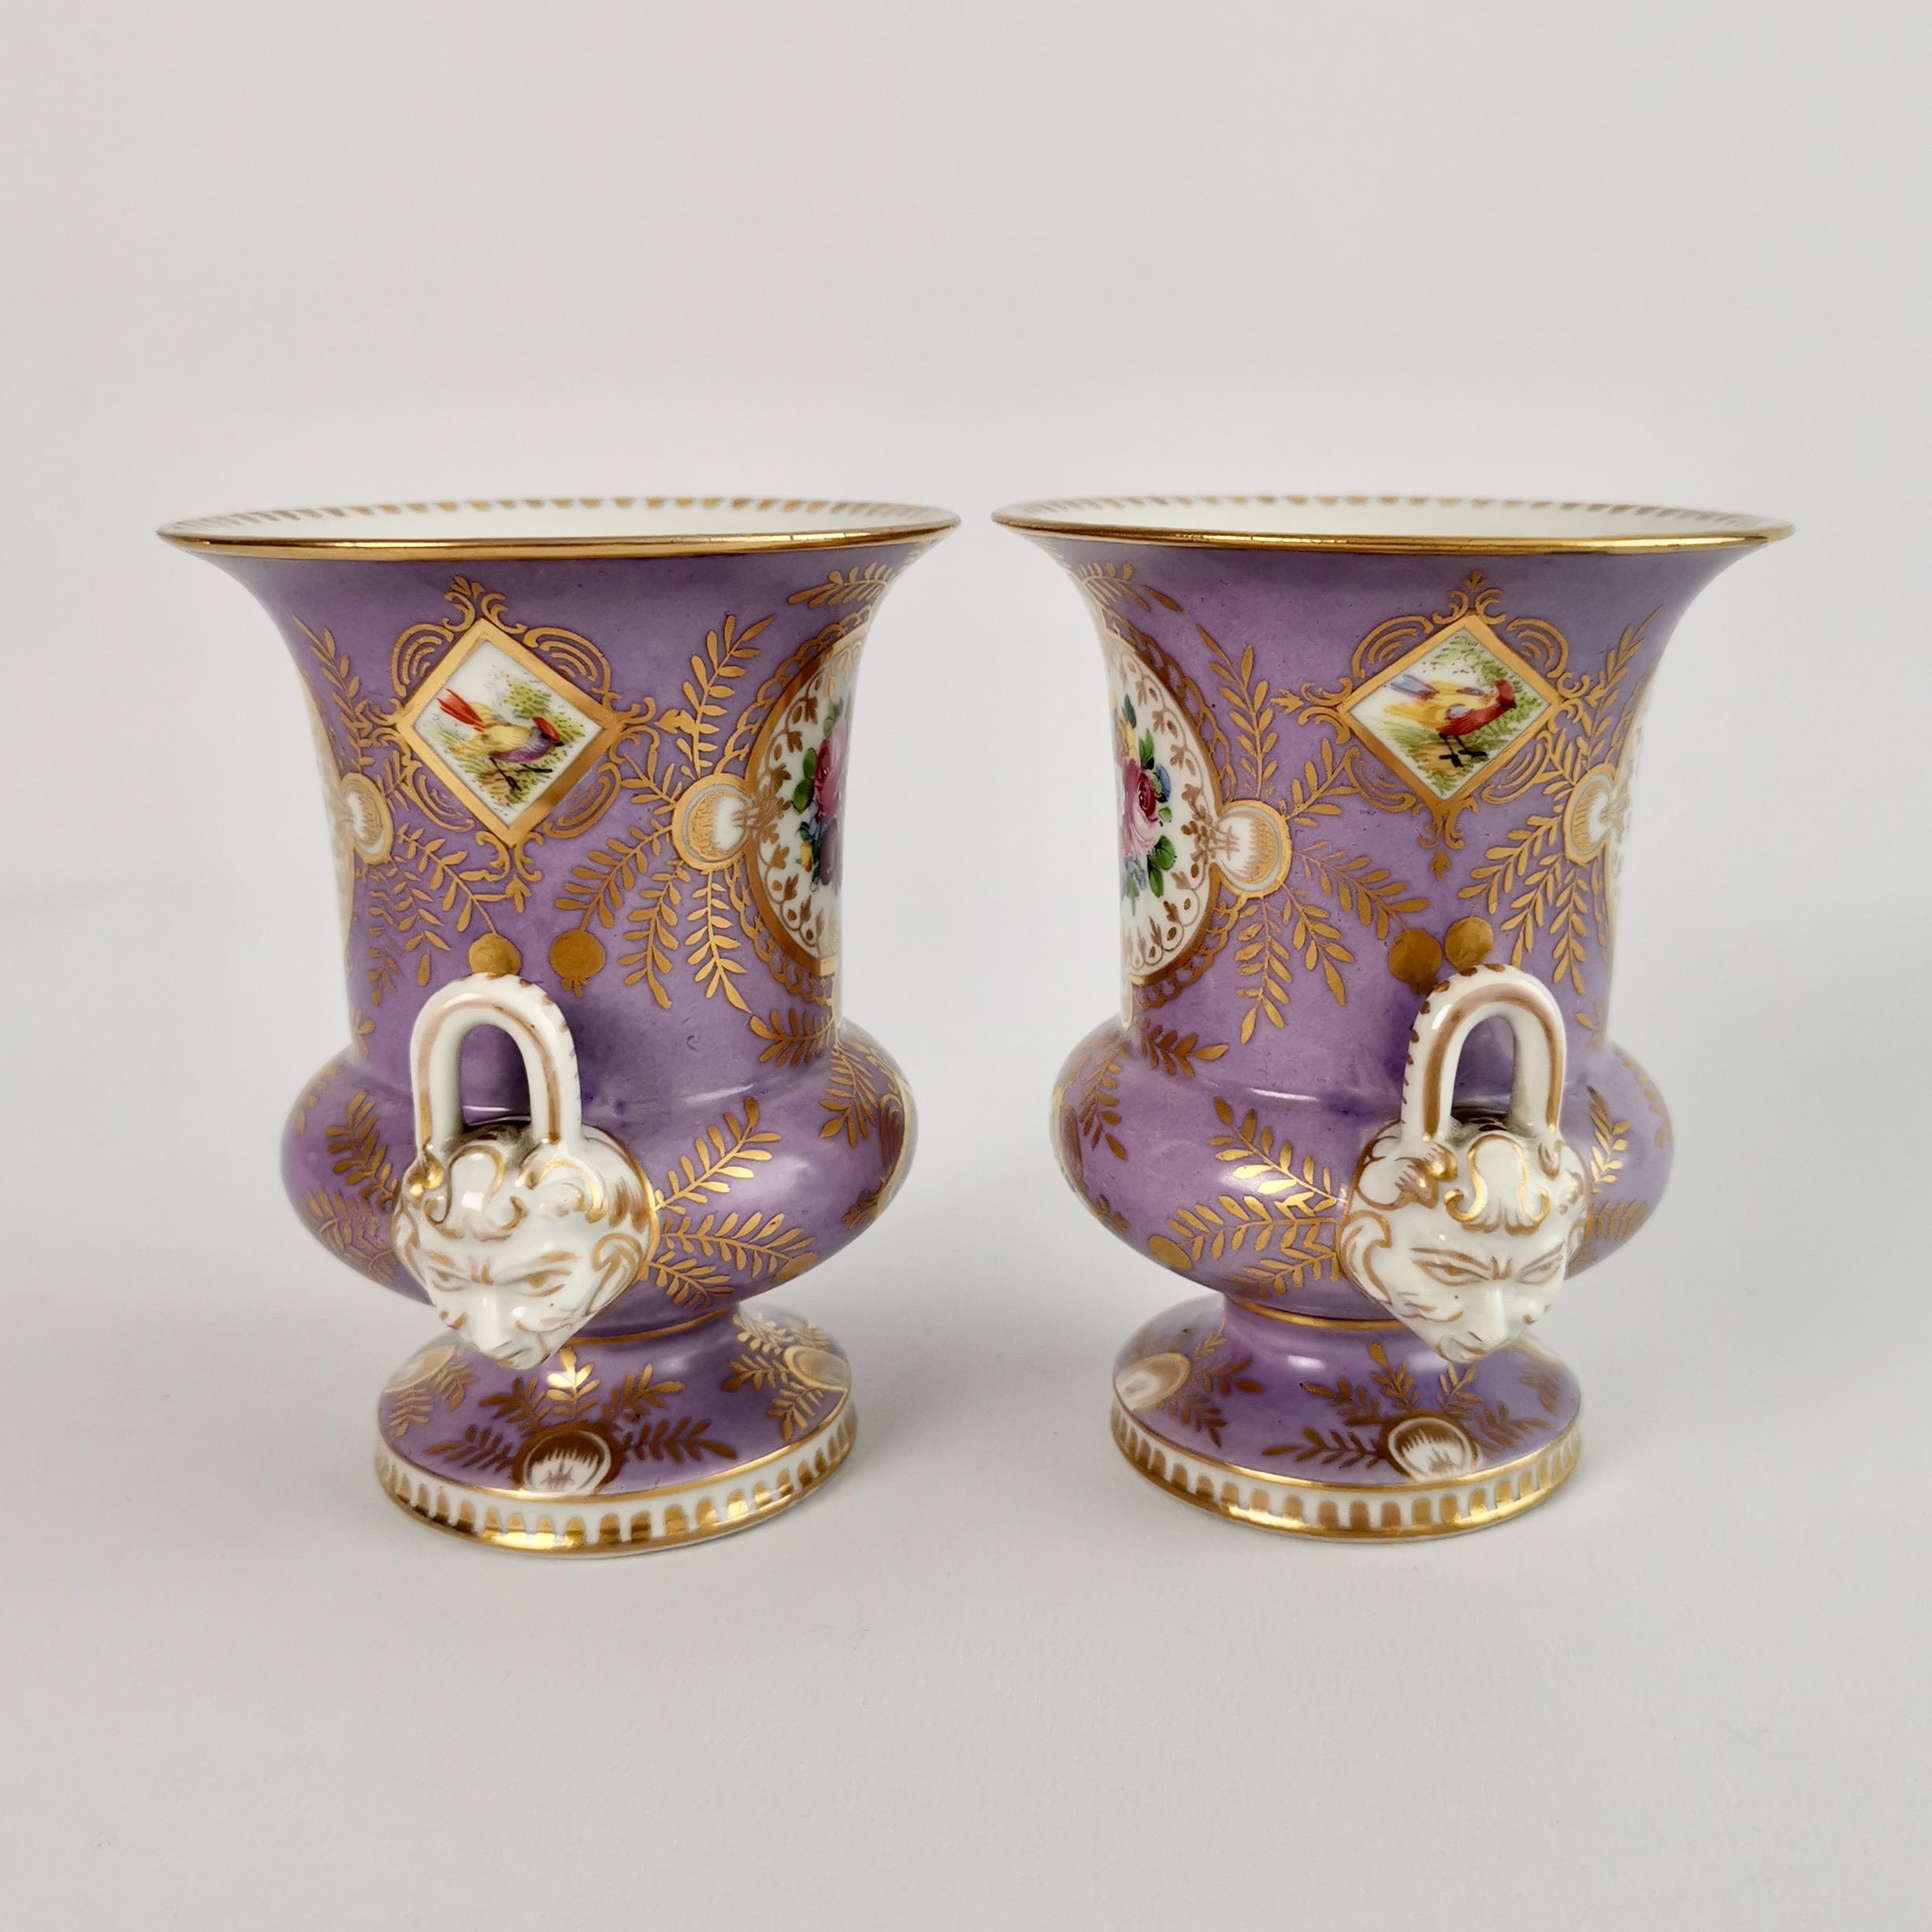 Campana-Vasen aus Porzellan, Edmé Samson zugeschrieben, Flieder, Vögel, Blumen, 19. Jahrhundert (Regency)